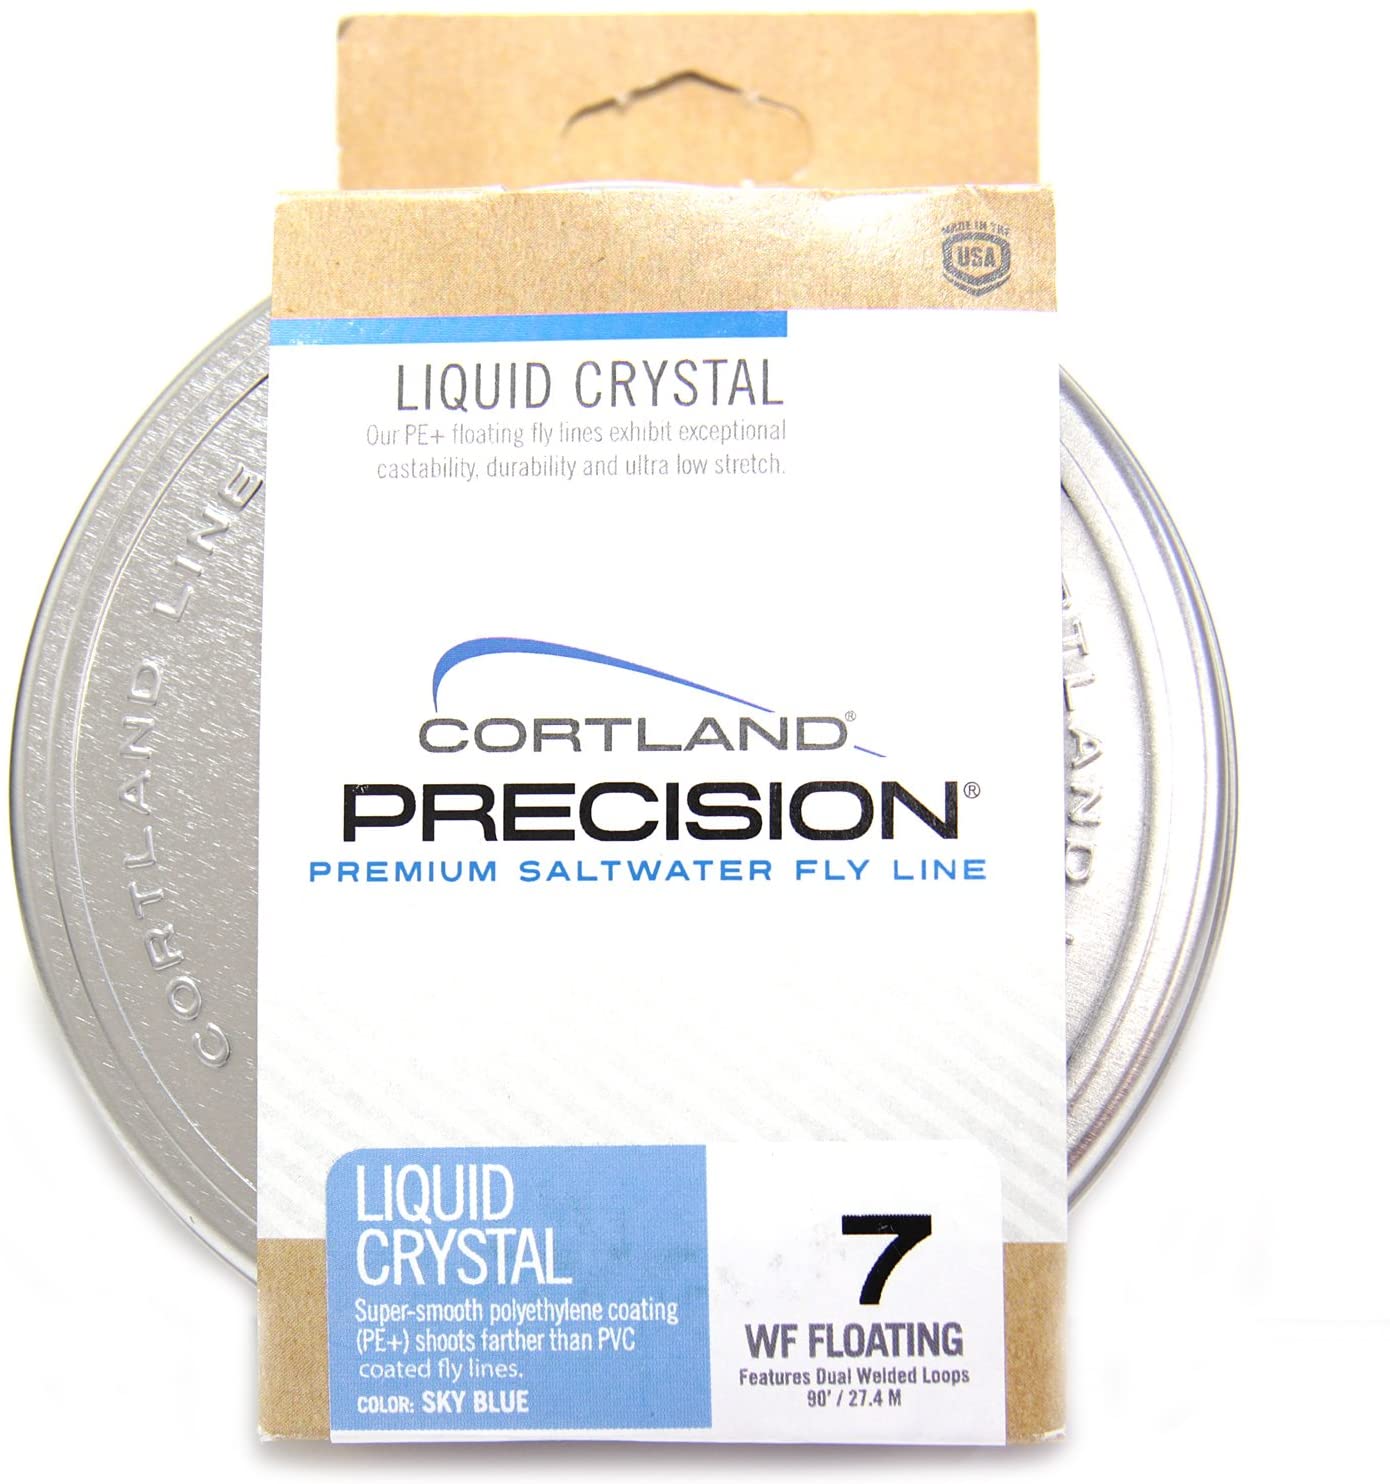 CORTLAND Precision Liquid Crystal Fly Line